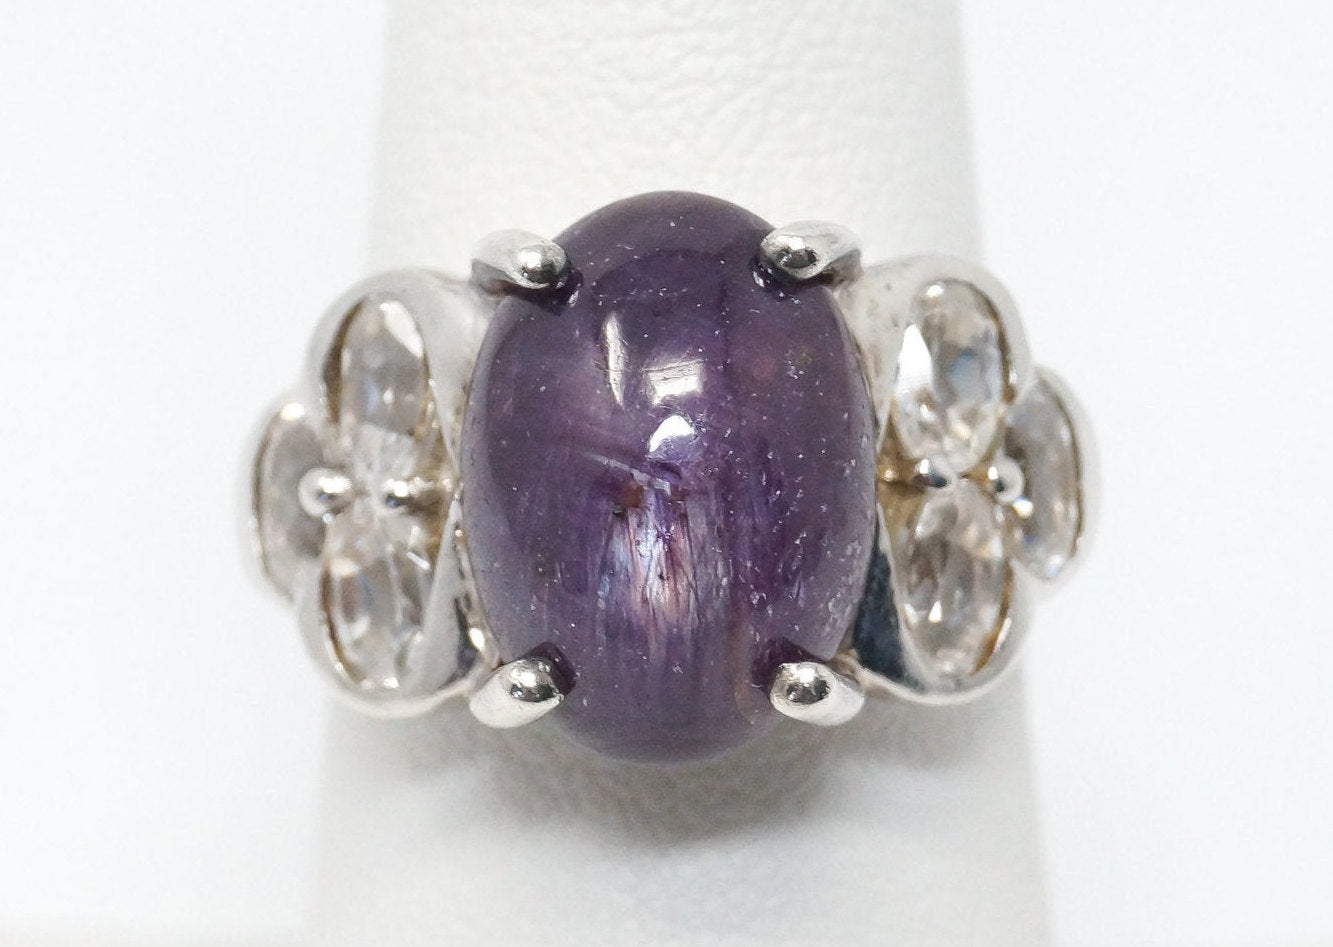 Vintage Violet Labradorite Cubic Zirconia Sterling Silver Ring - Size 6.75